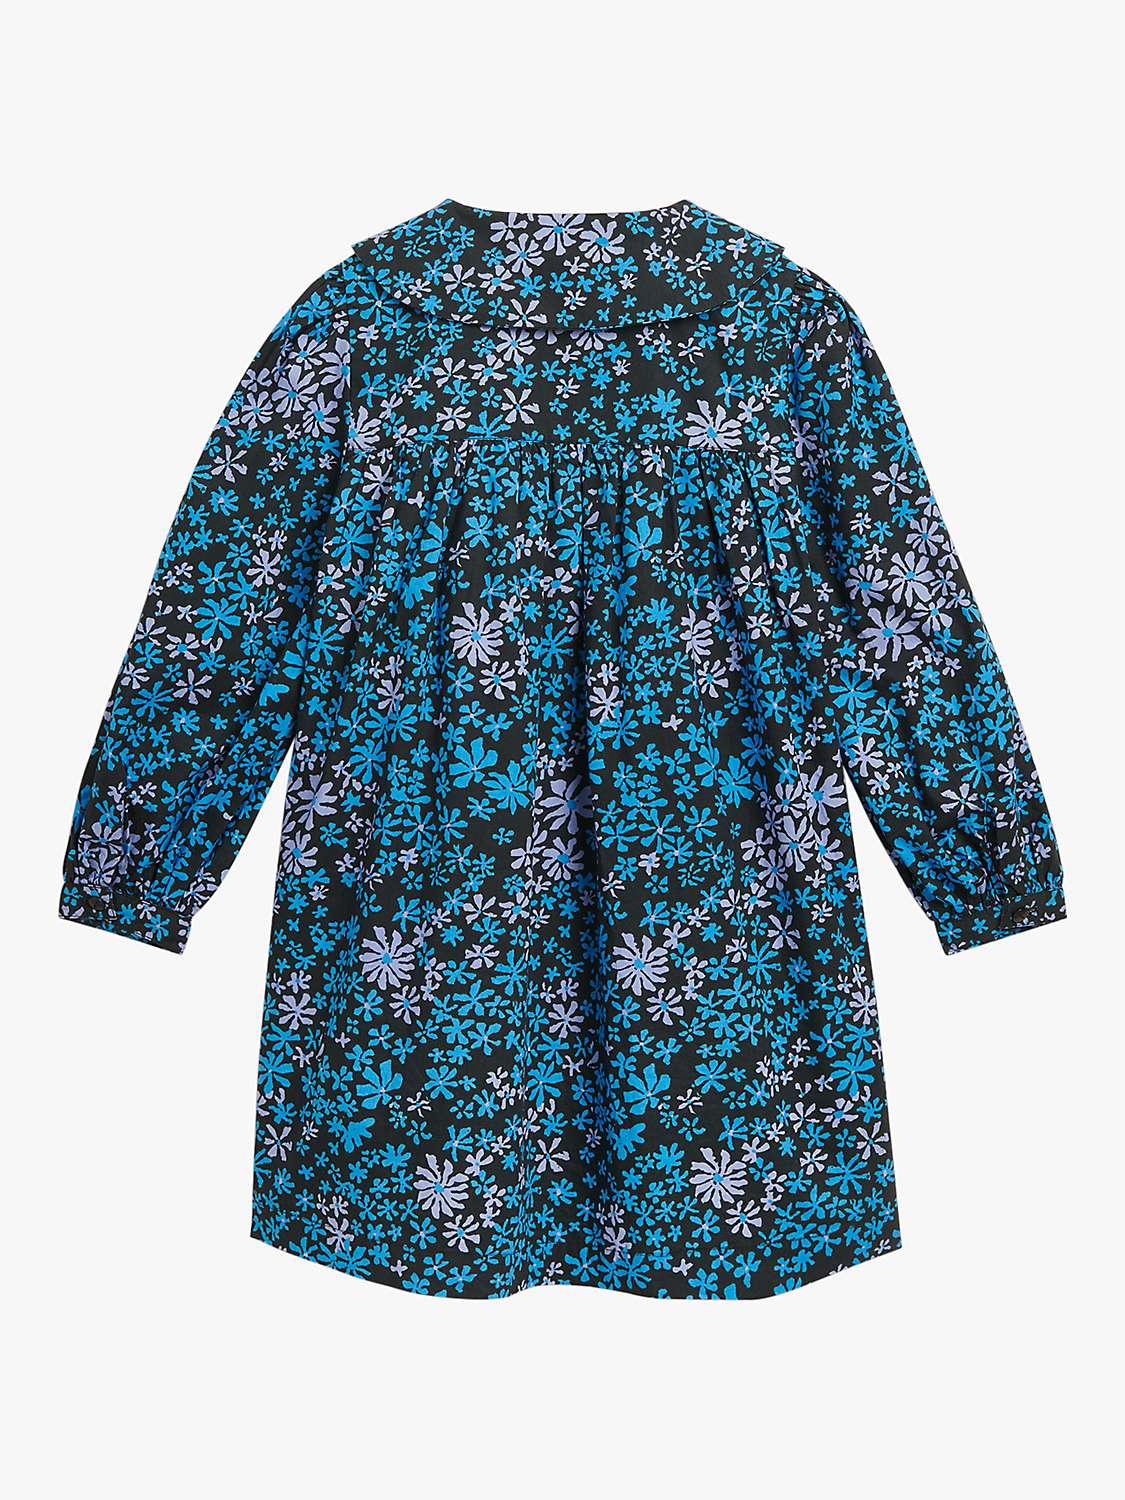 Buy Whistles Kids' Sofia Boho Floral Print Dress, Blue/Multi Online at johnlewis.com